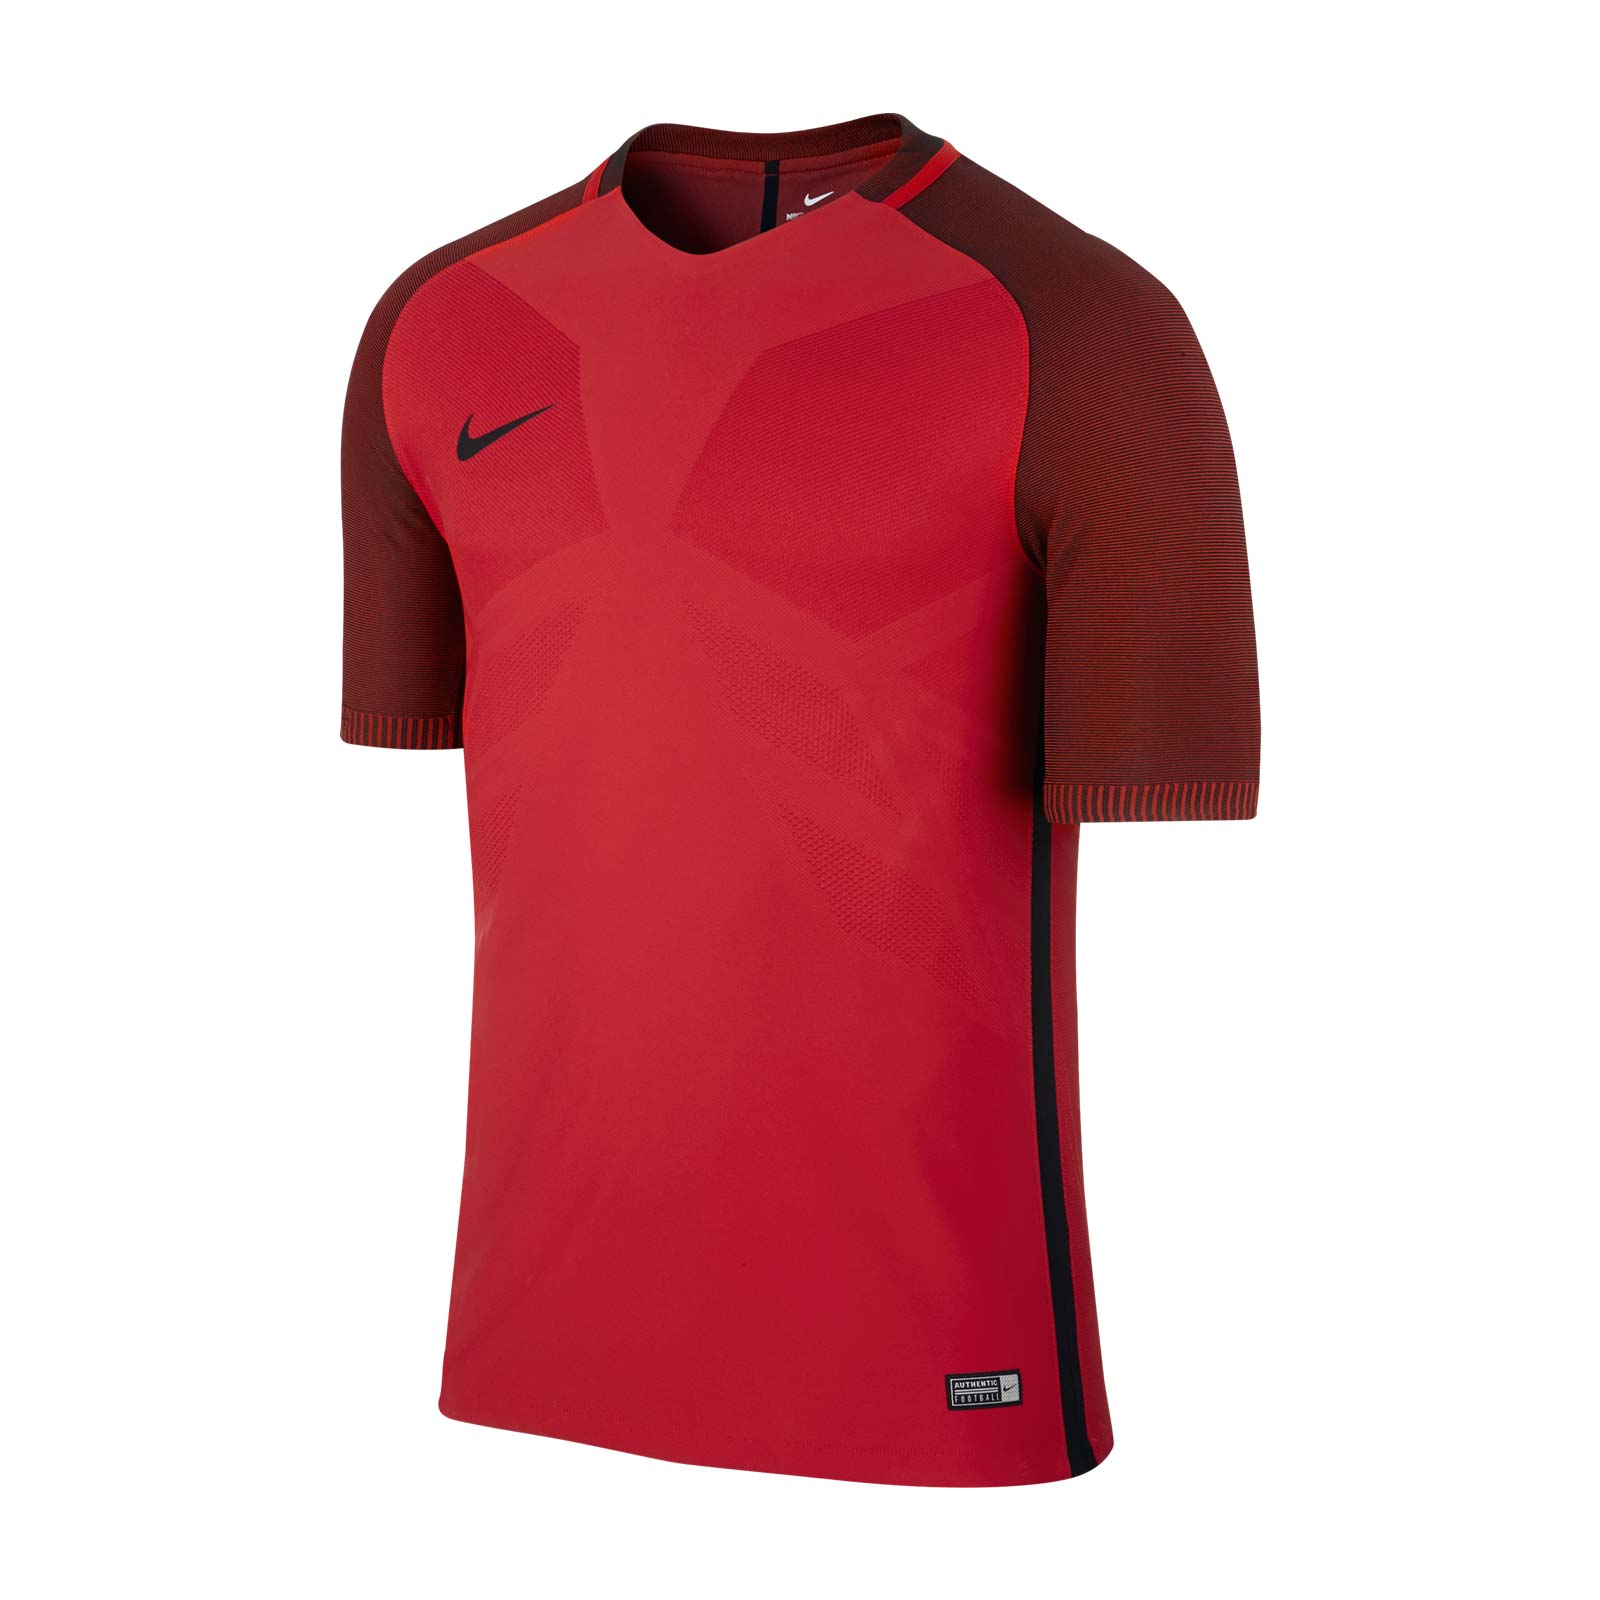 All-New Nike Vapor I / Revolution IV Teamwear Jerseys Released - Footy